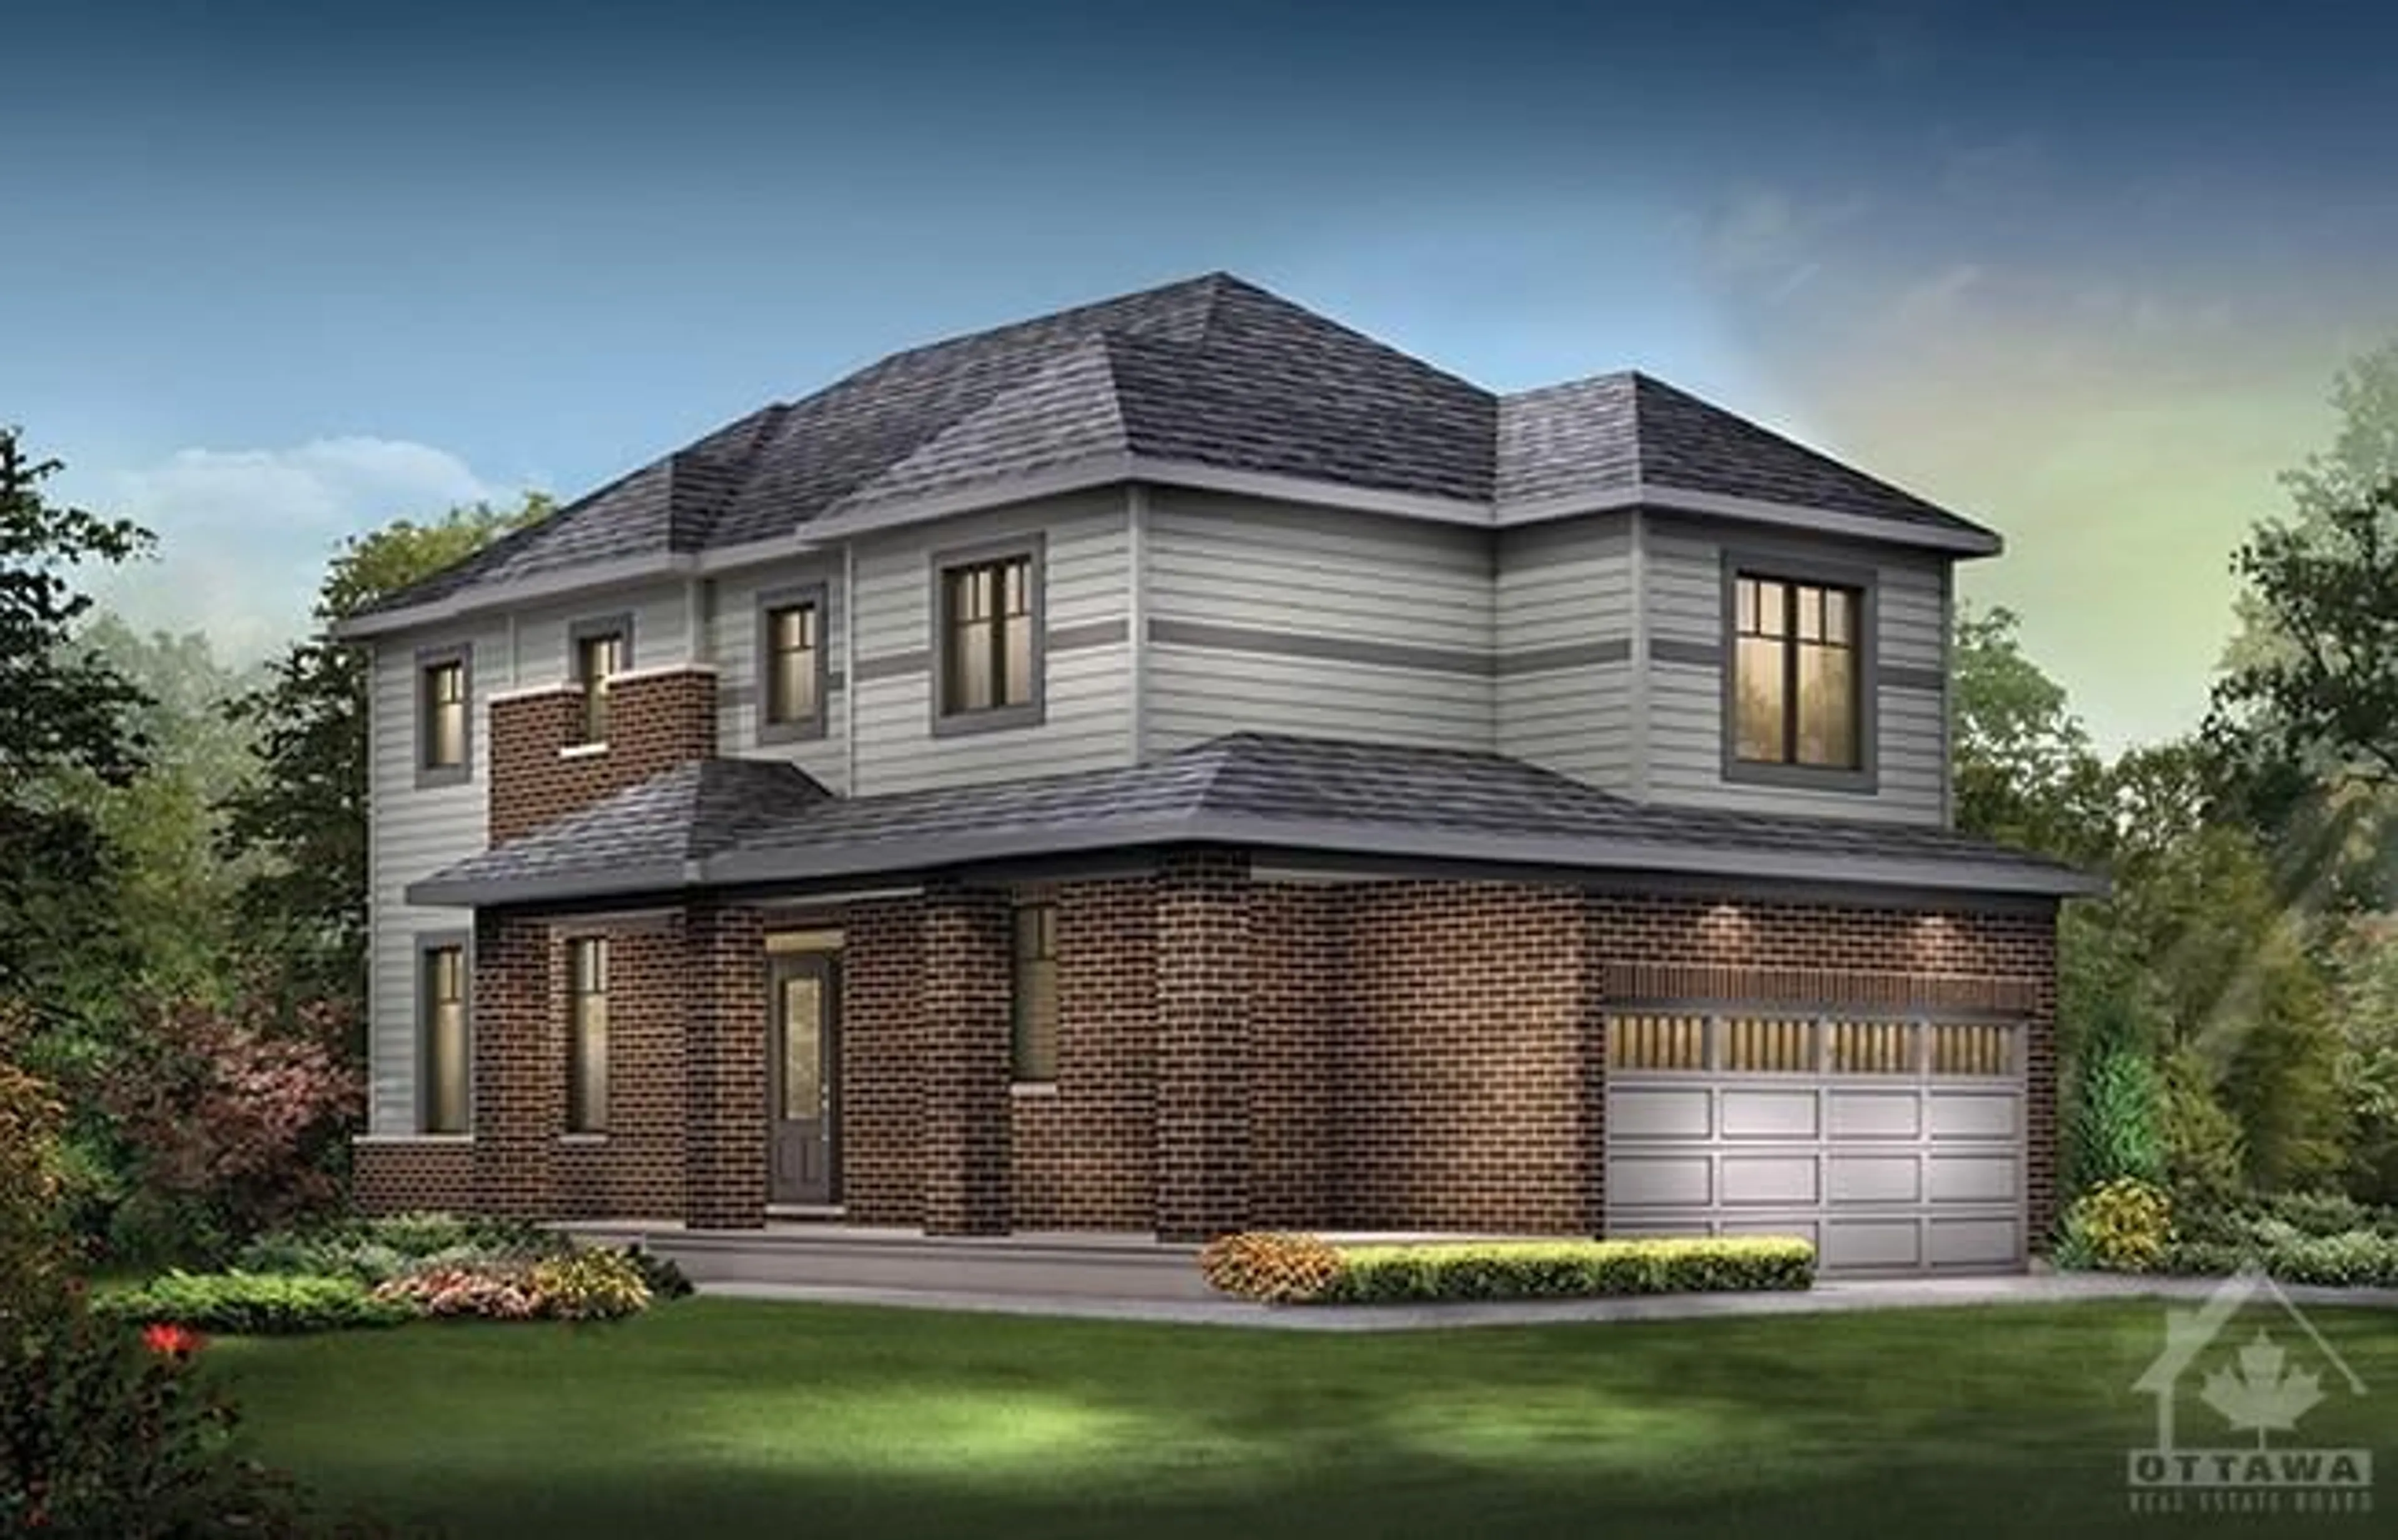 Home with brick exterior material for 318 ELSIE MACGILL Walk, Kanata Ontario K2W 0K7